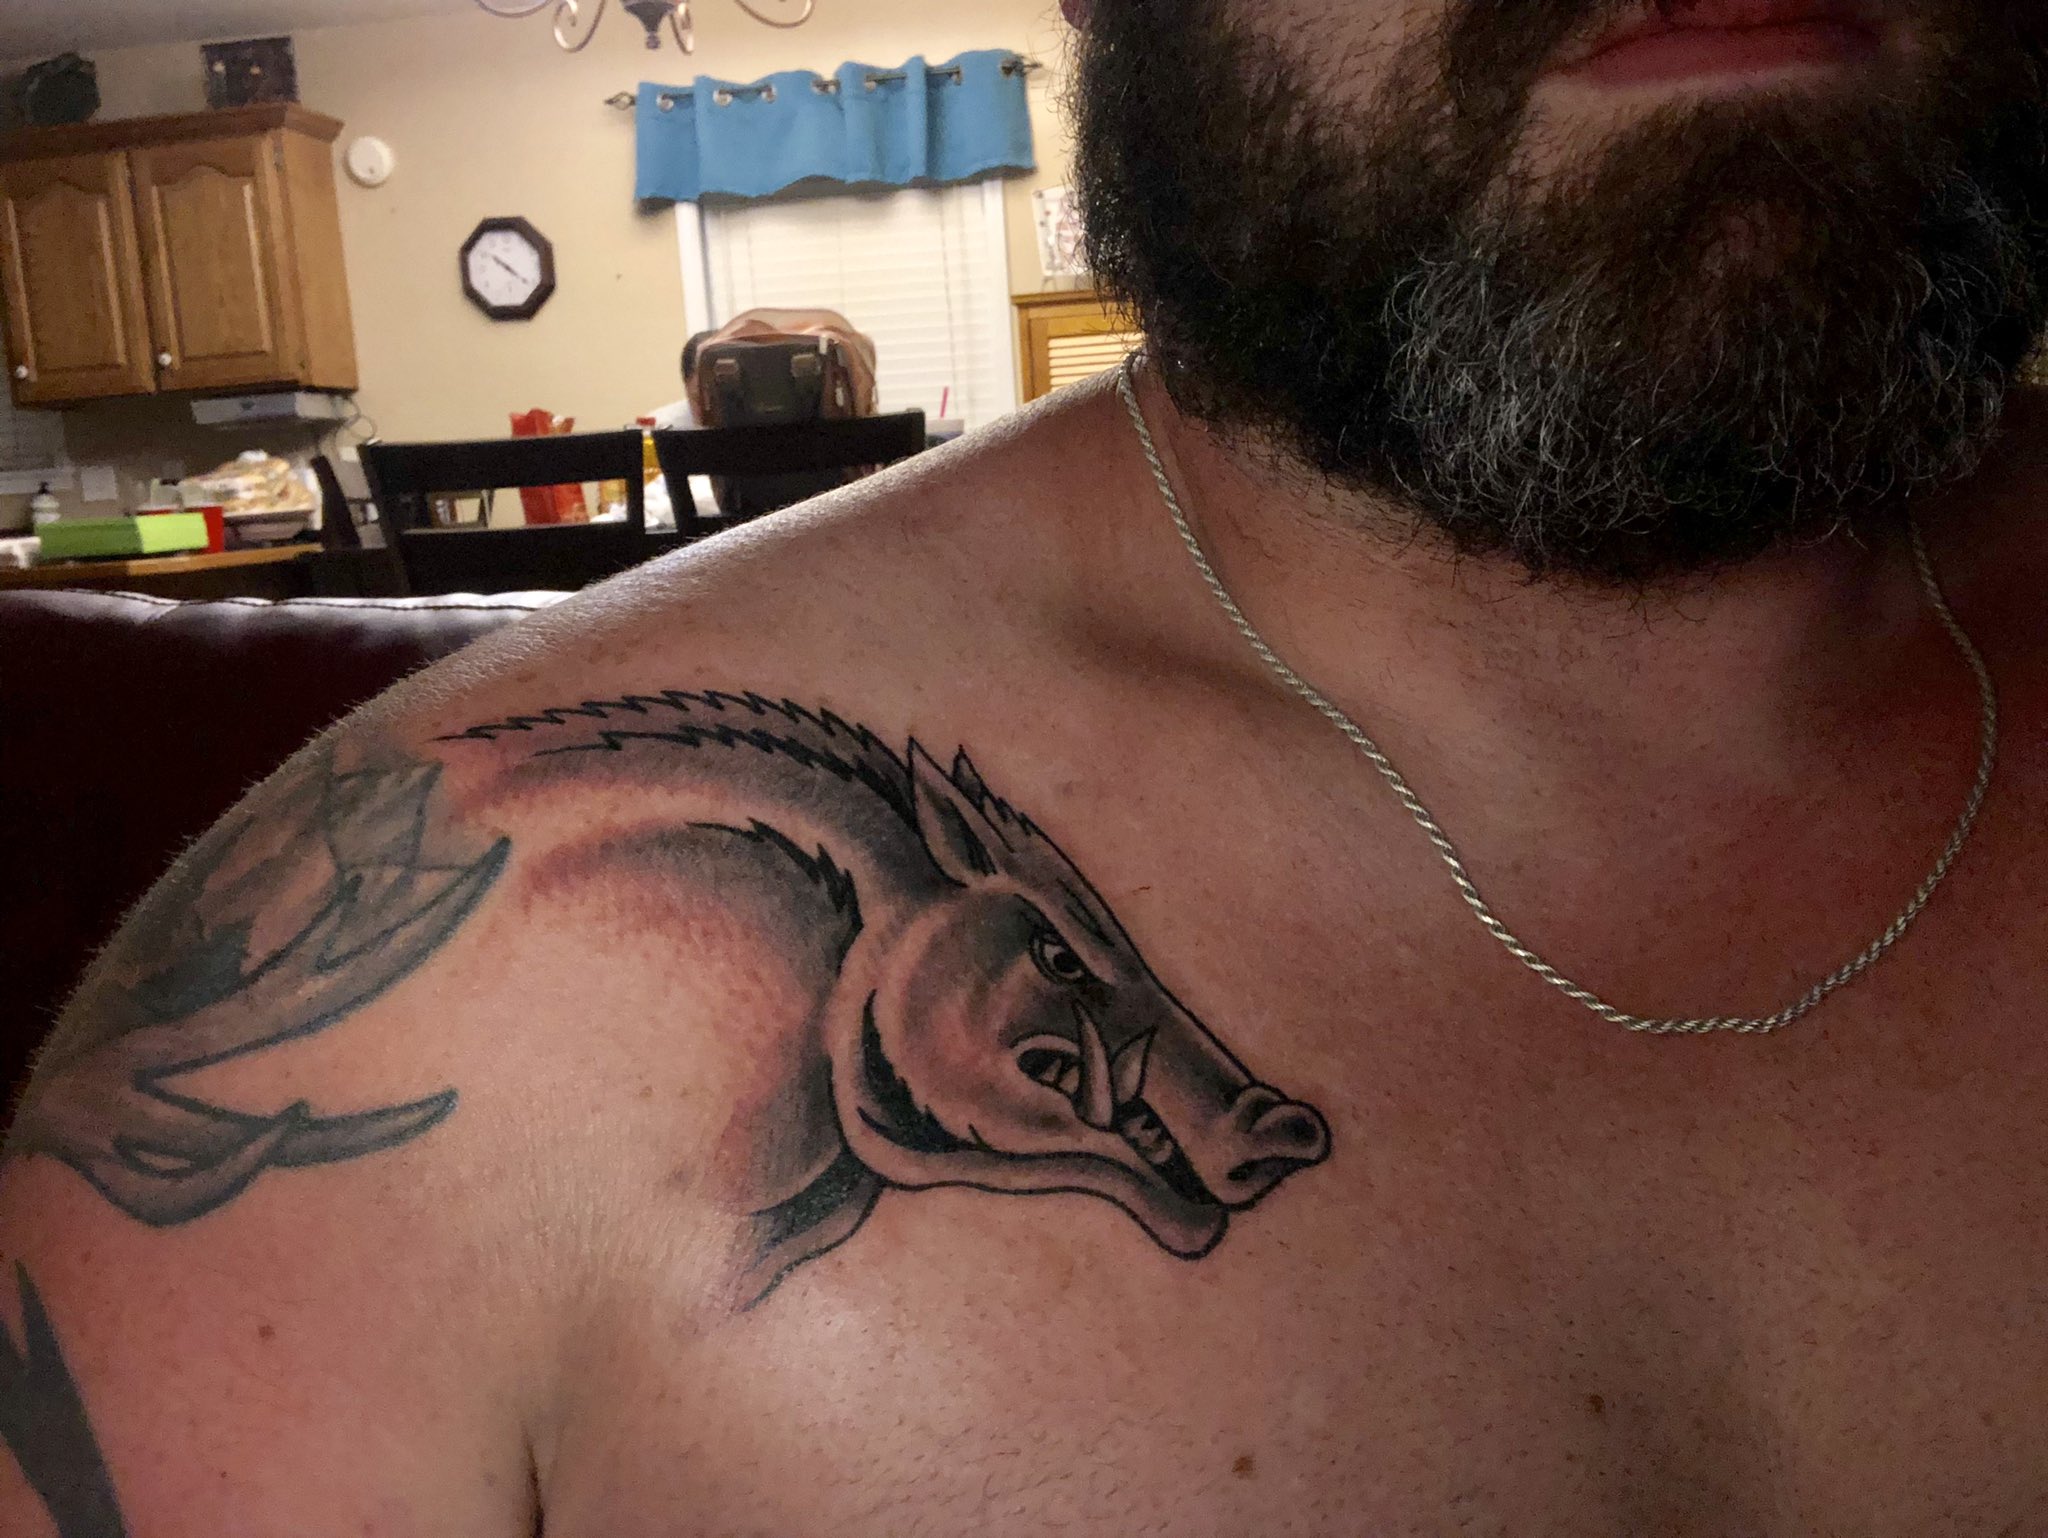 Nebr️sk️ Hog f️n on X: "Show me your Razorback tattoo. I'll go first…. https://t.co/bUIeggYHCB" / X